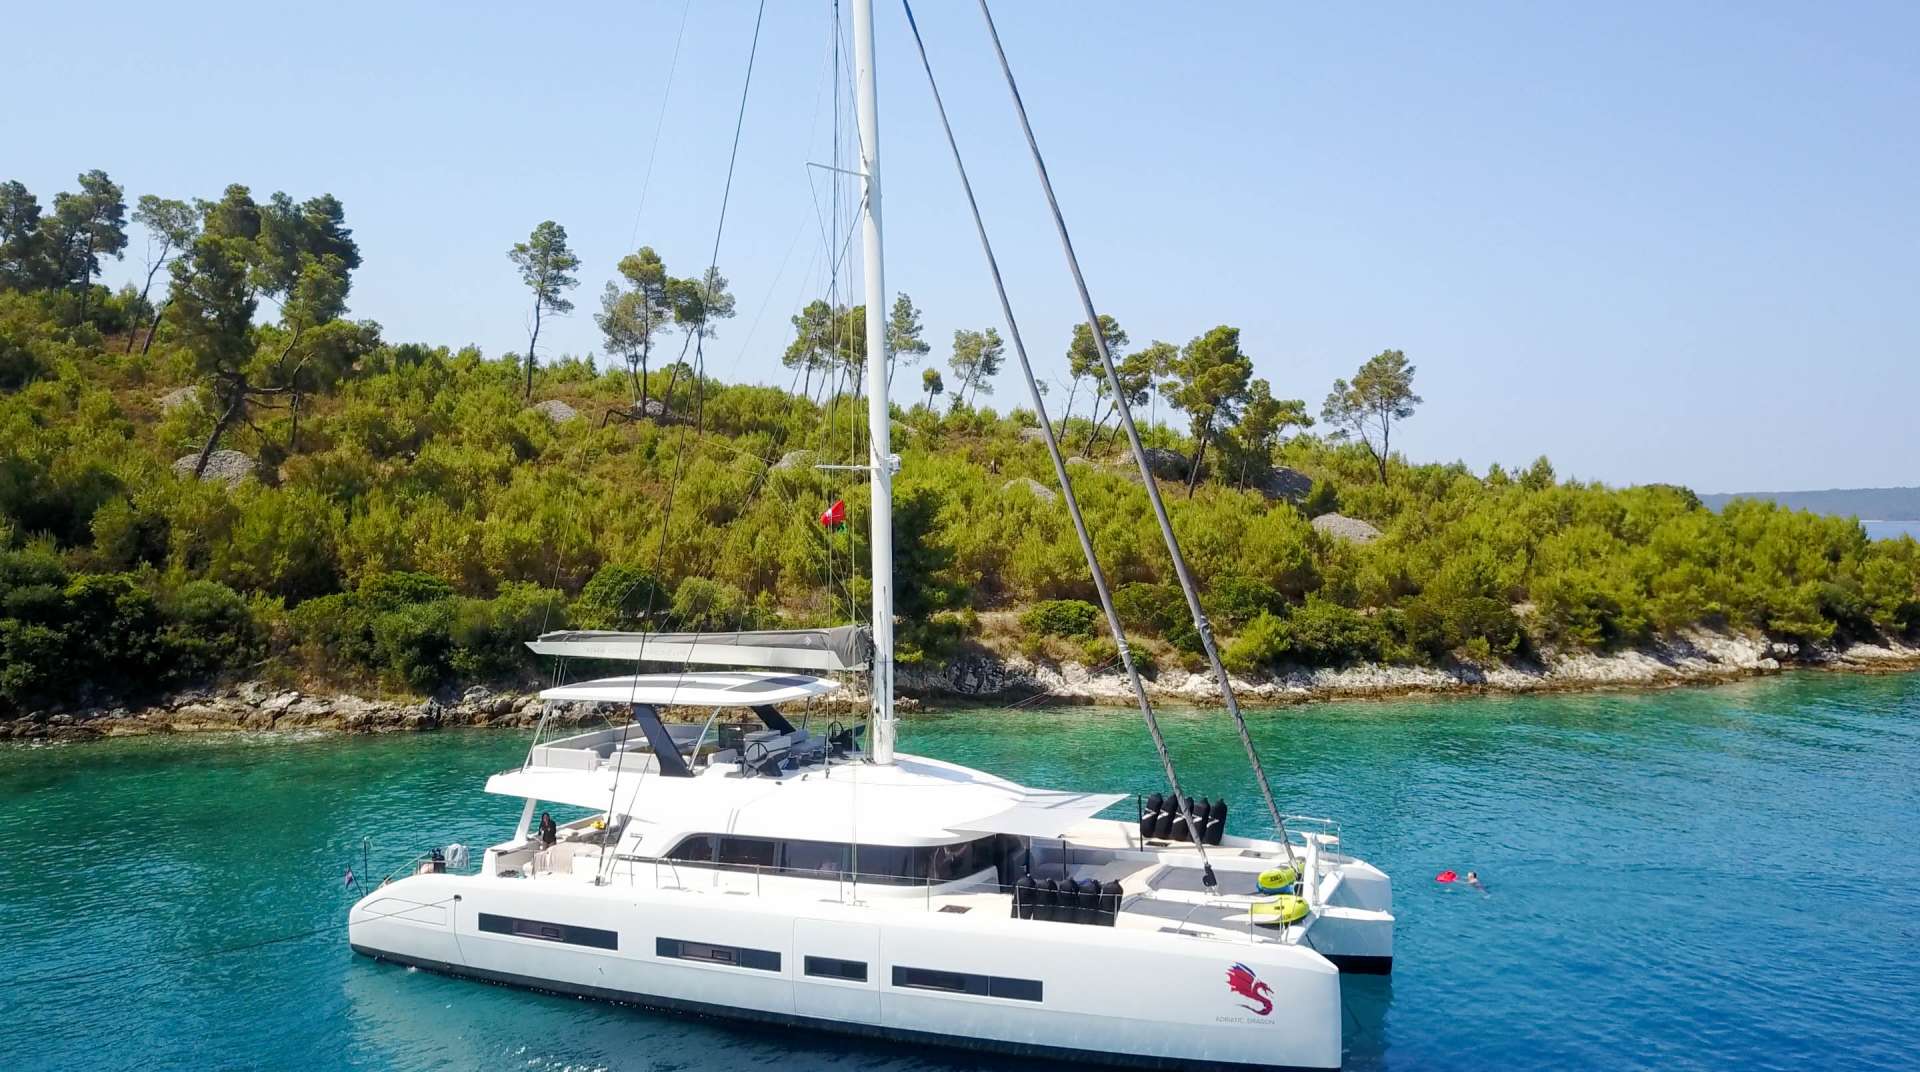 adriatic dragon (lagoon 77) - Yacht Charter Banjole & Boat hire in Croatia 1